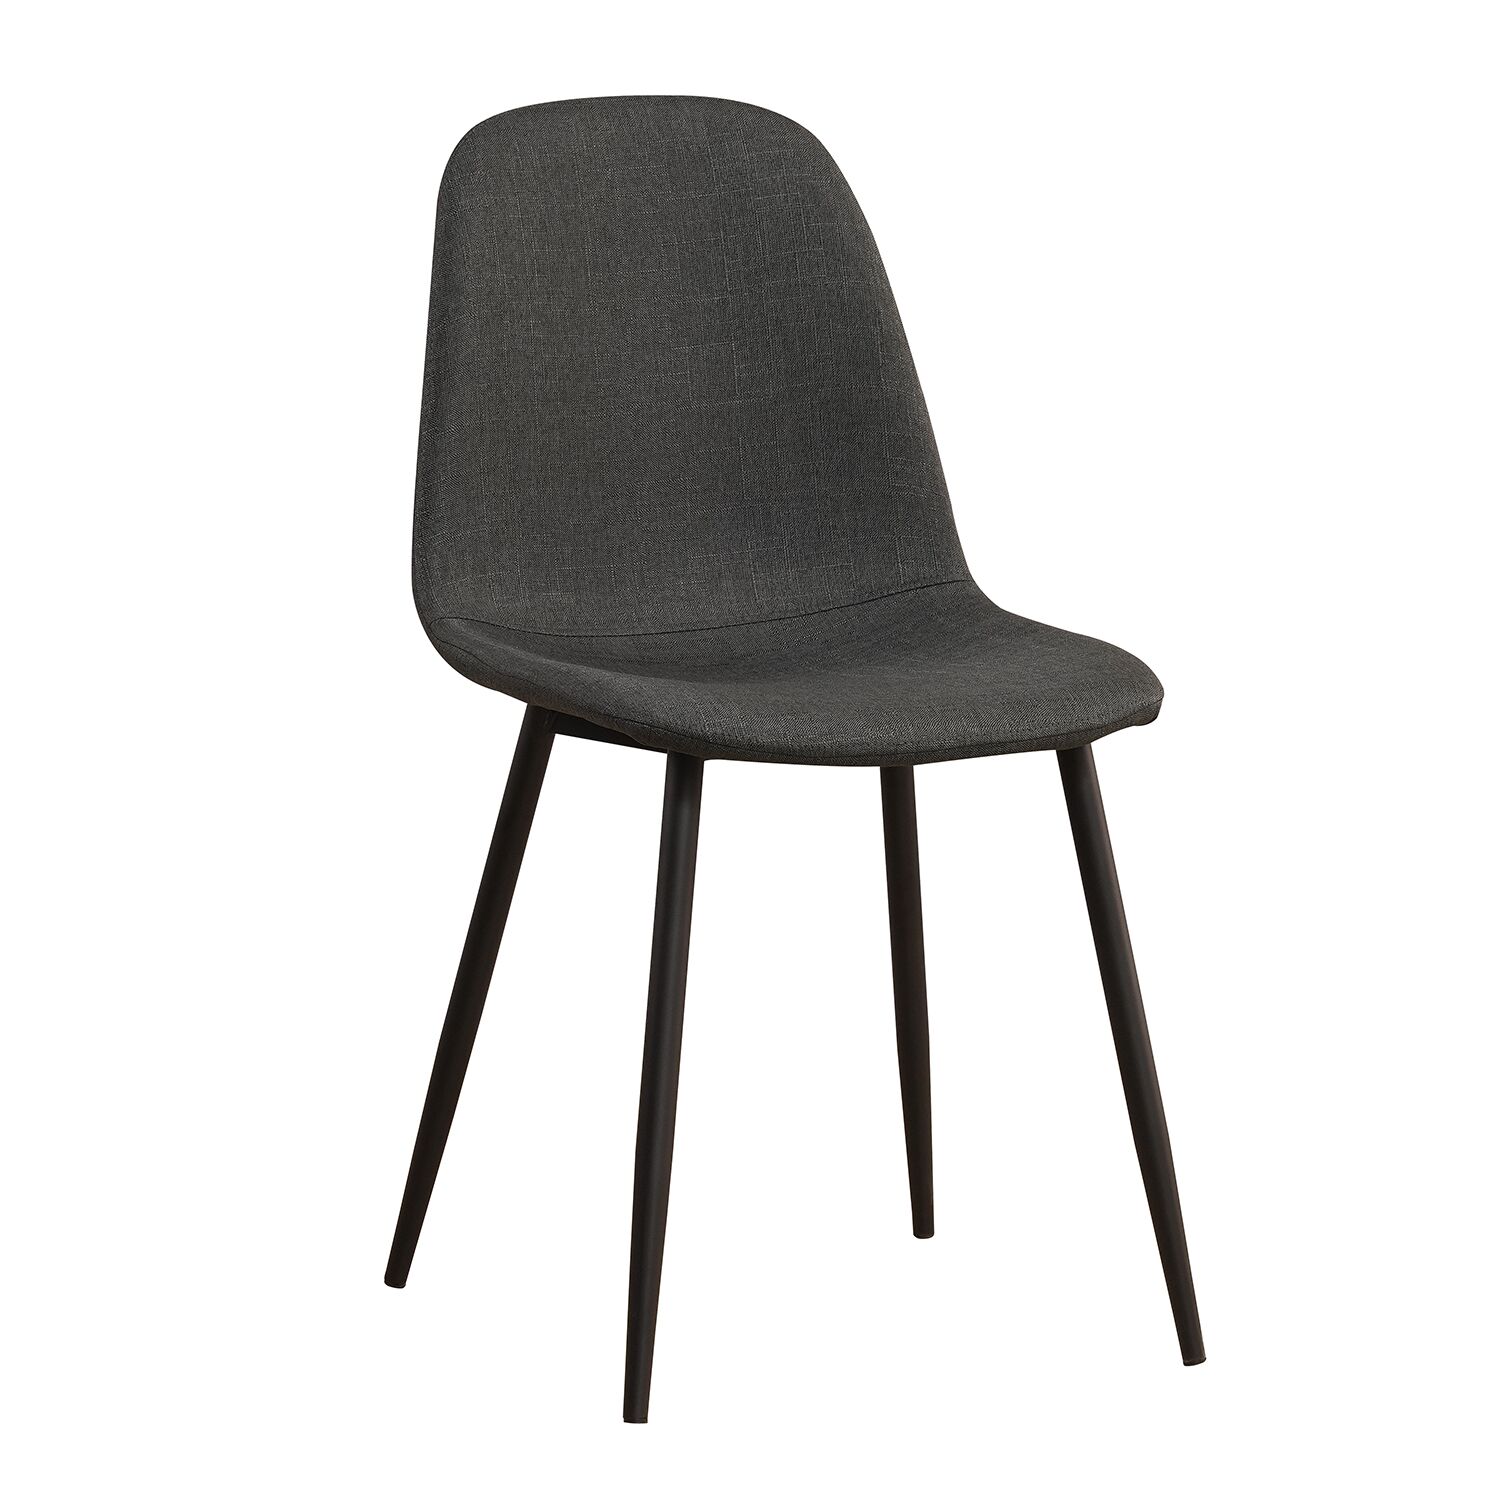 TOUKAN Chair Dark Gray Fabric/Metal/Wood 44x52x85cm